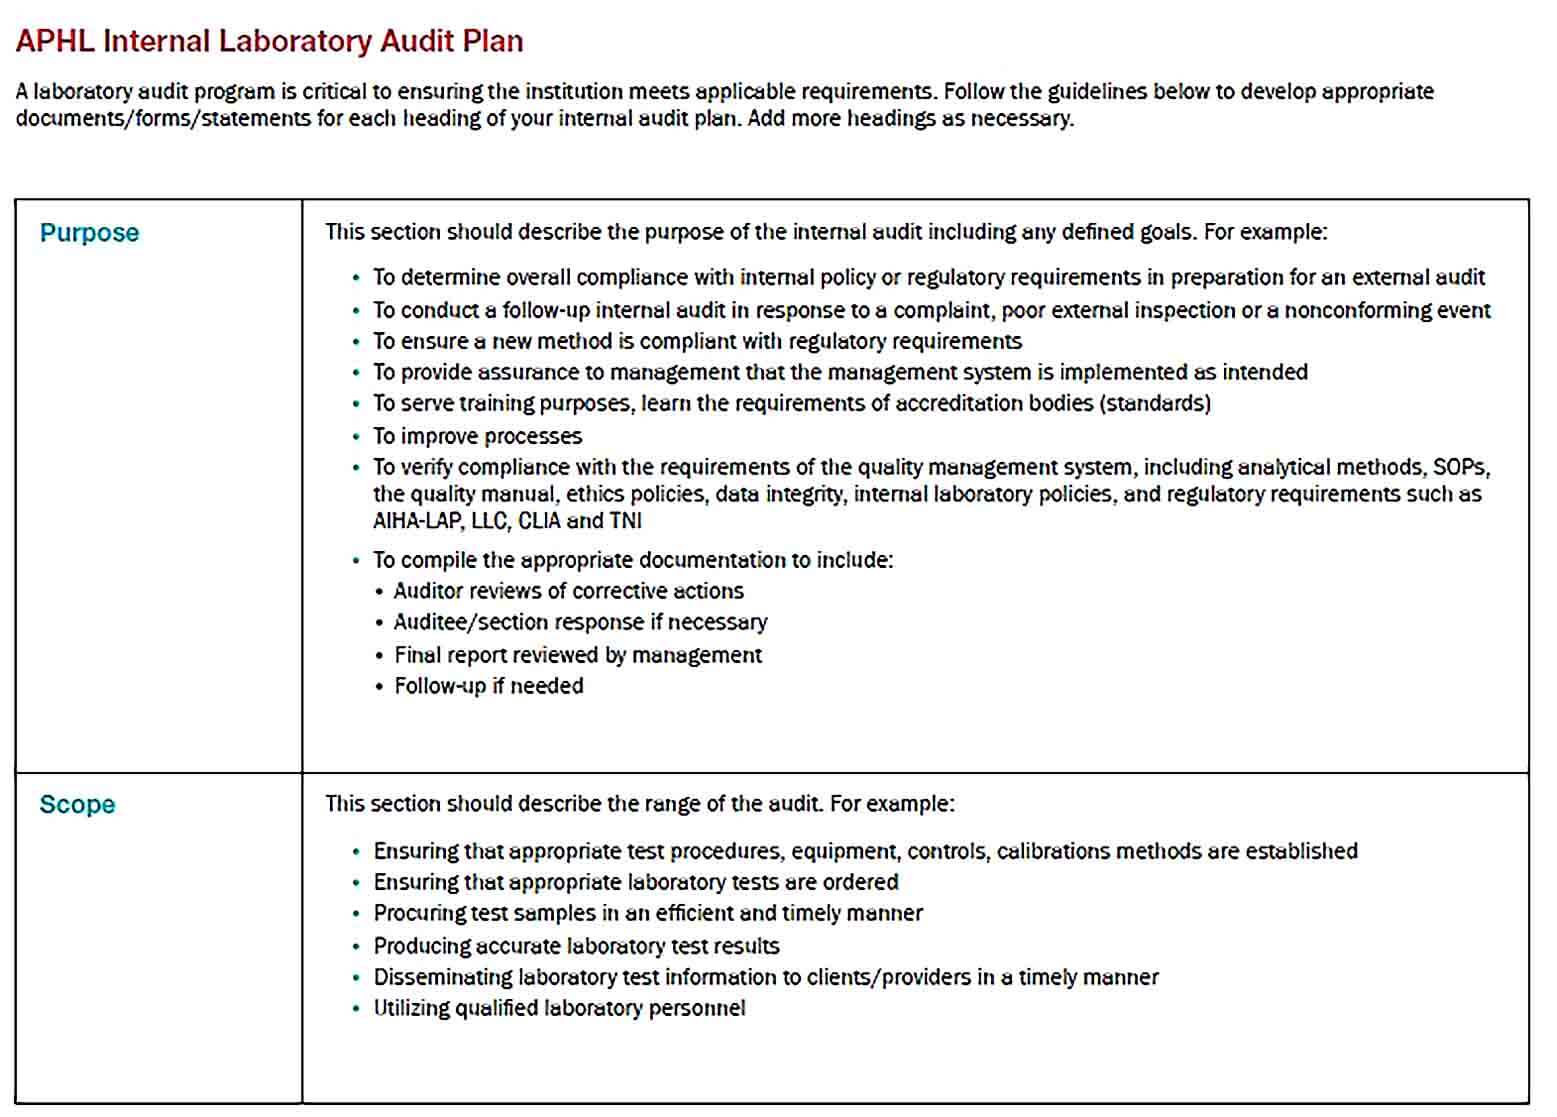 Sample Laboratory Internal Audit Plan Template